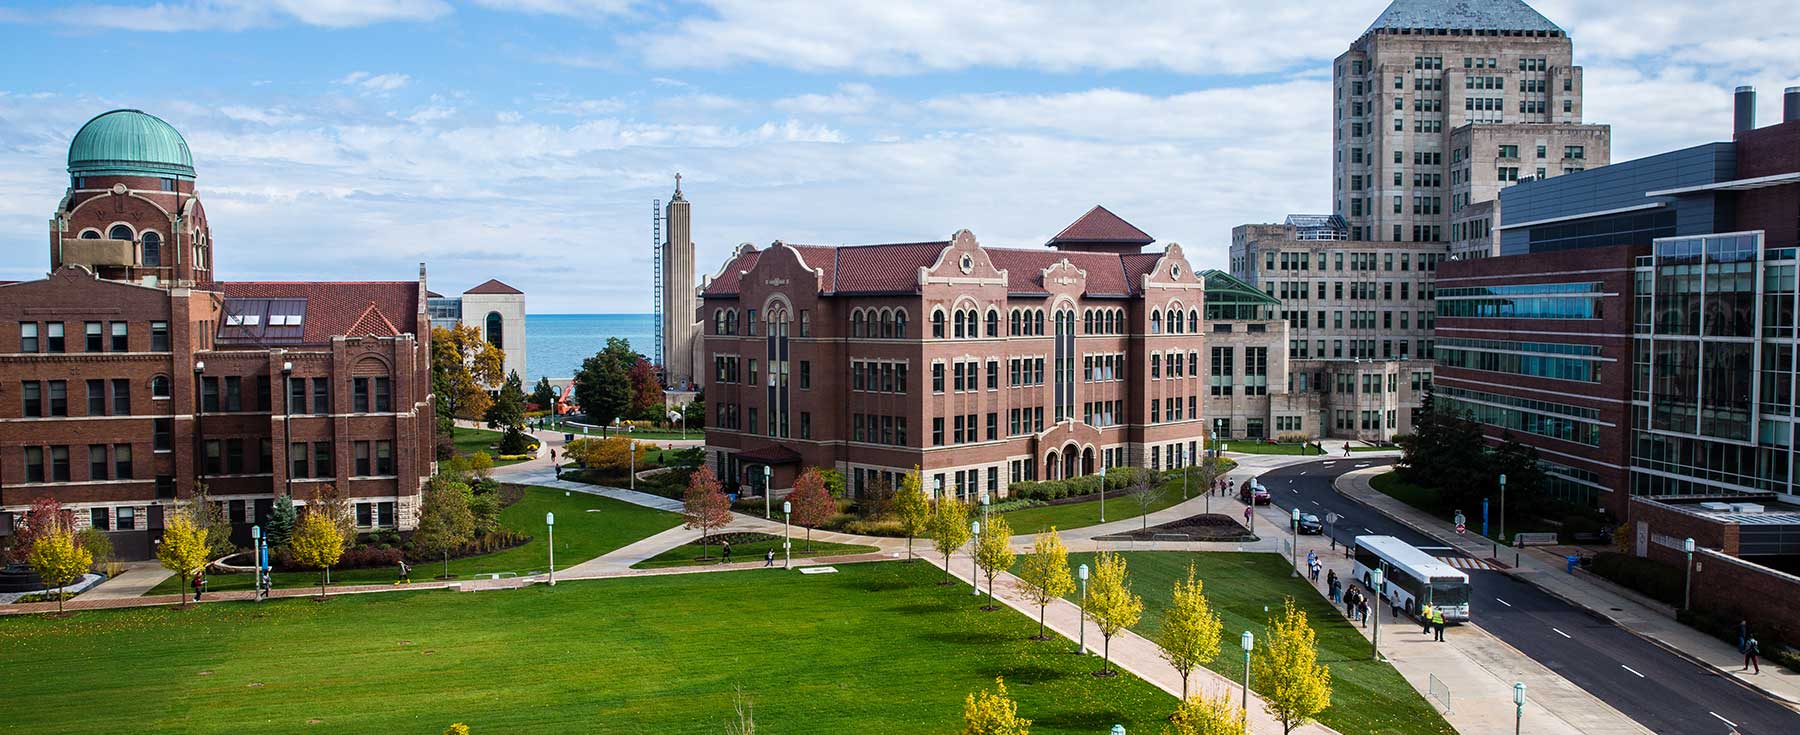 Loyola Chicago Library - Professors Stumble Through Online Teaching As